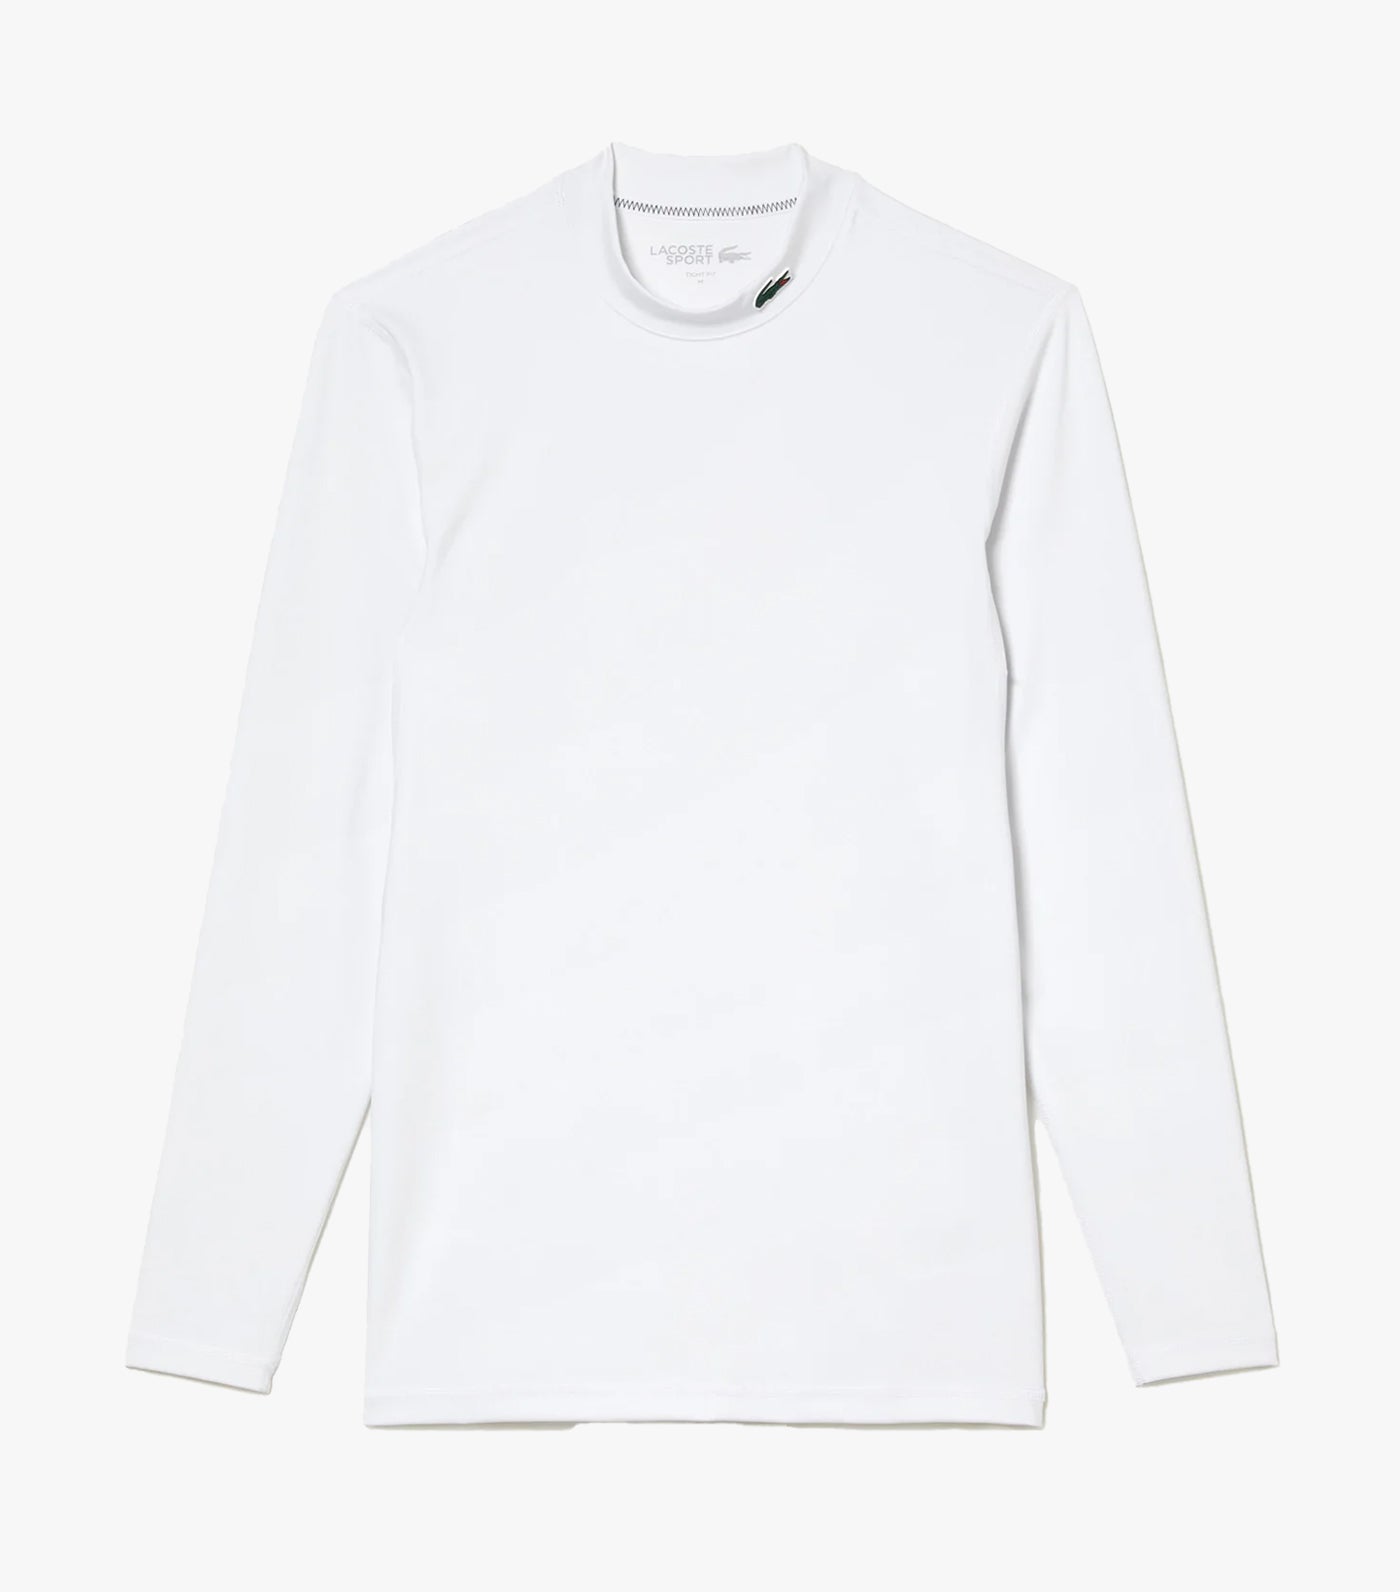 Men’s Sport Long Sleeve Tight Fit T-Shirt White